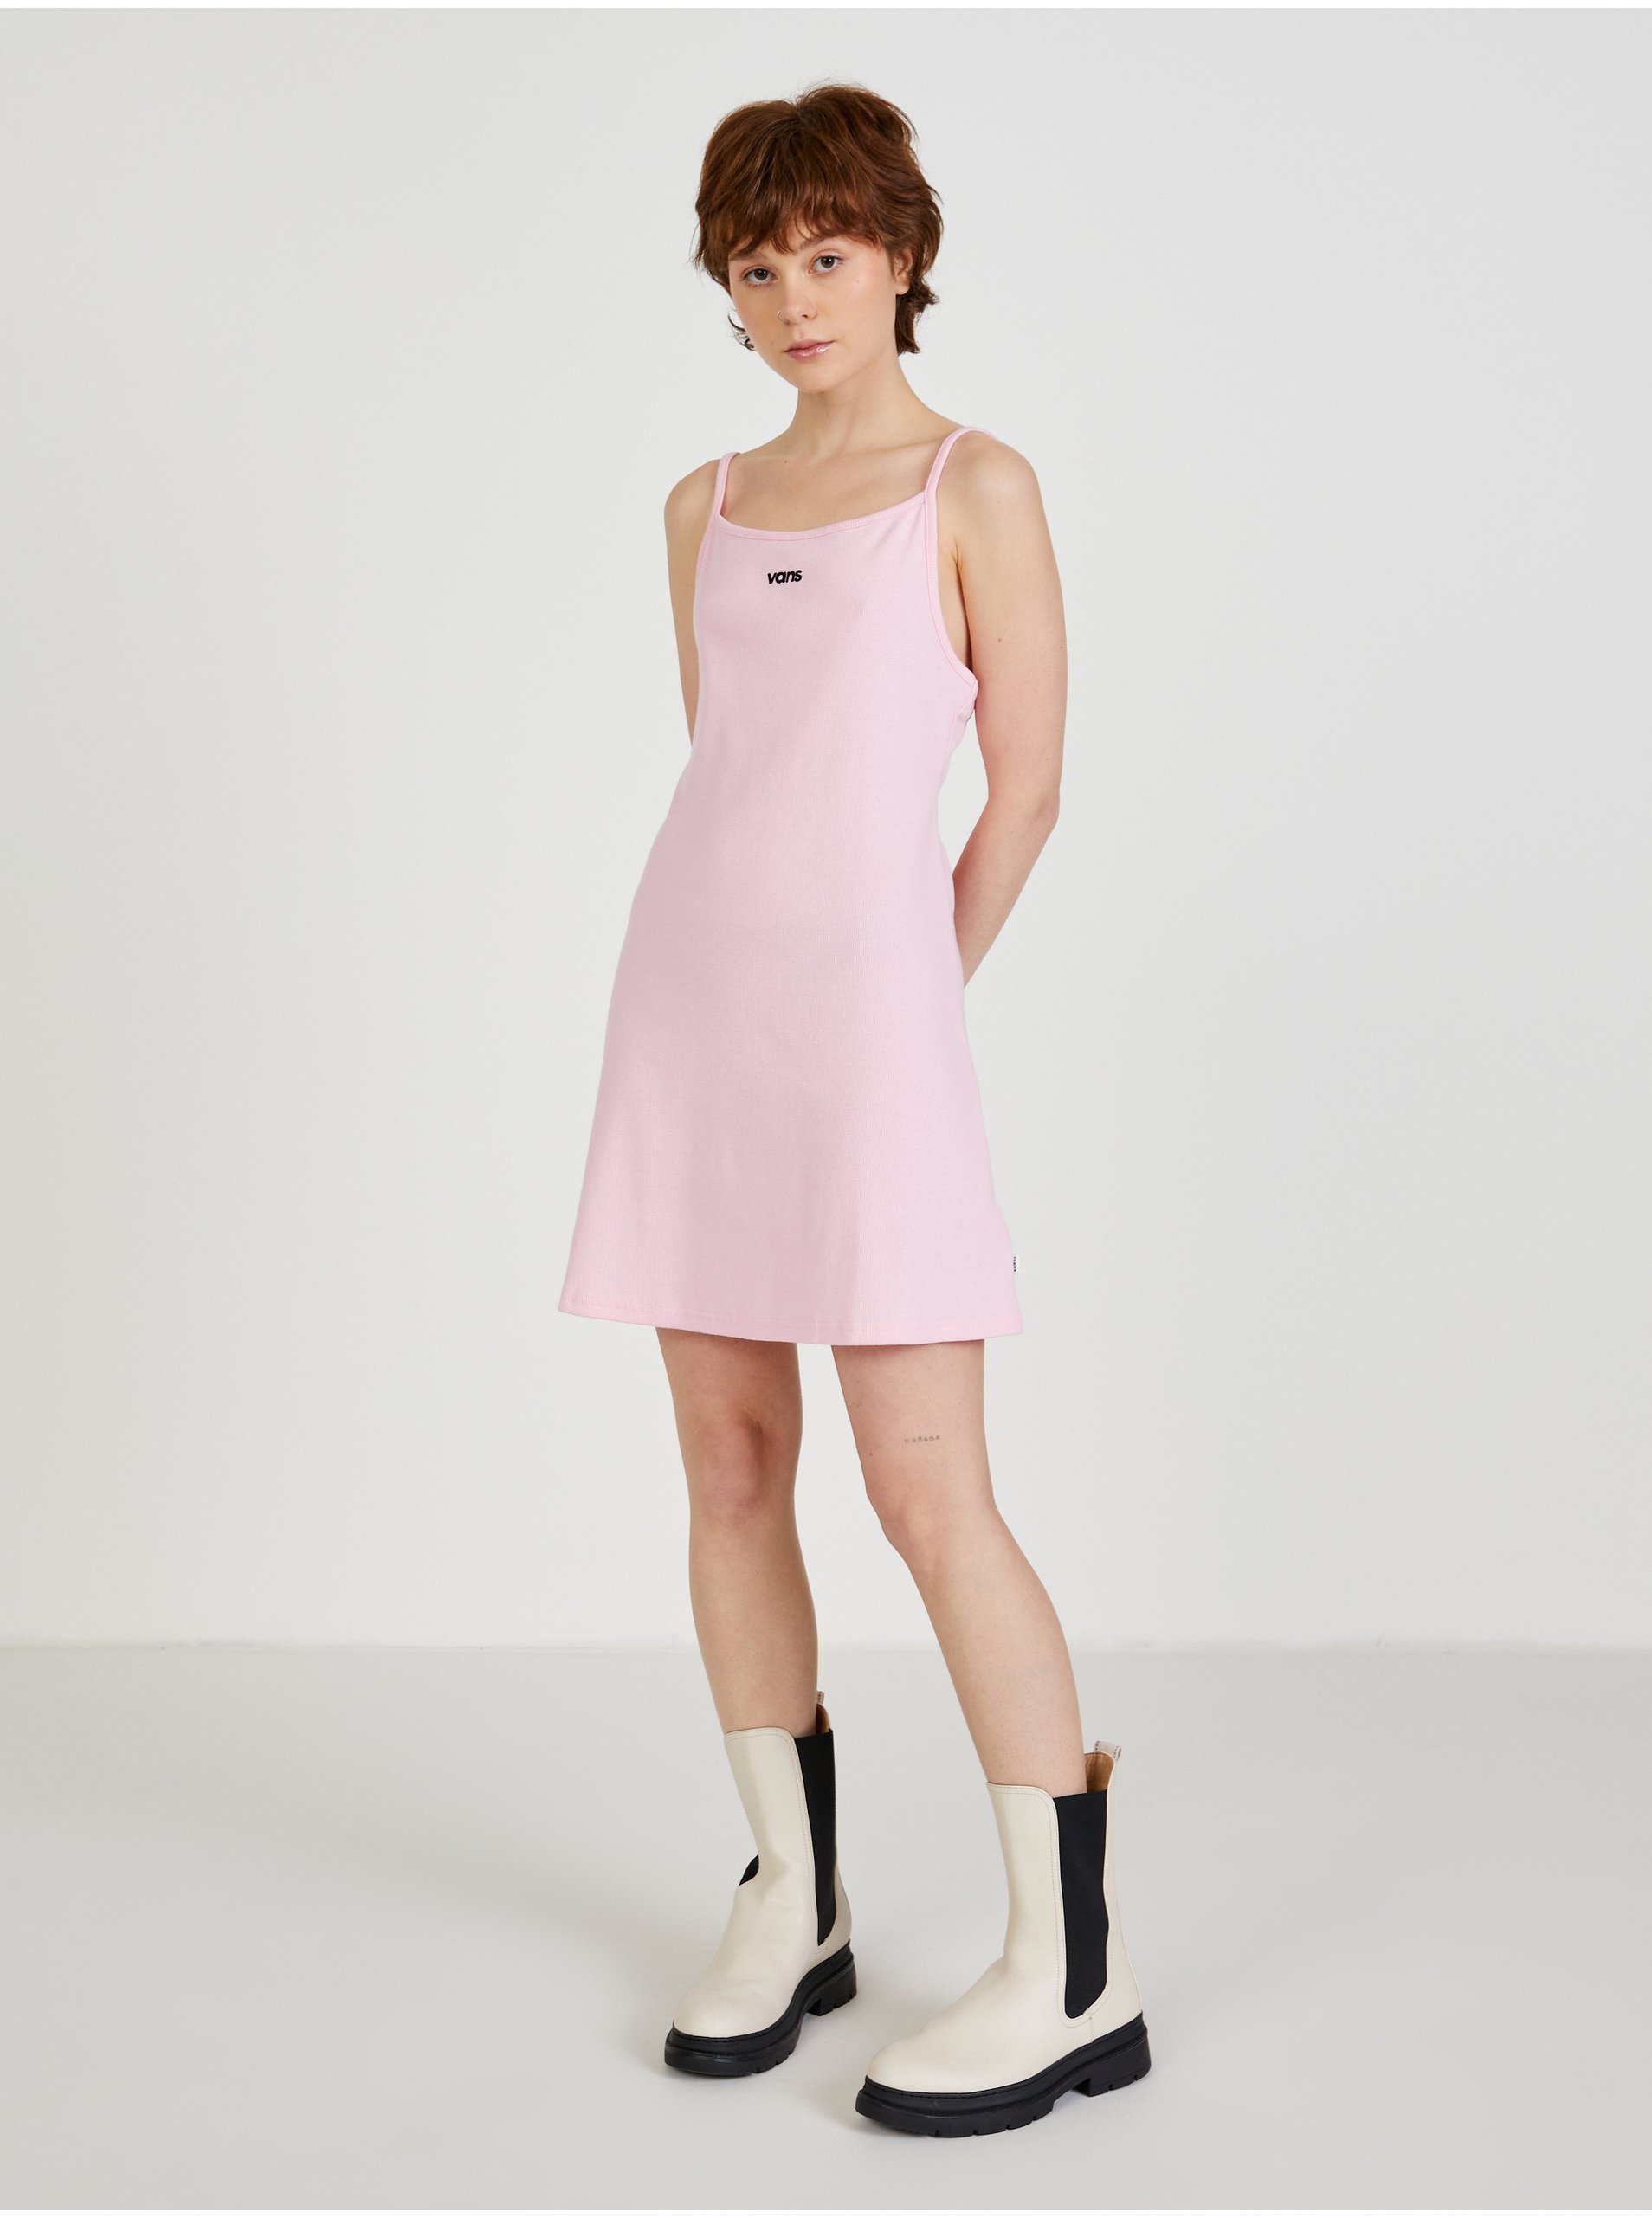 Pink Women's Short Dress VANS Jessie - Women